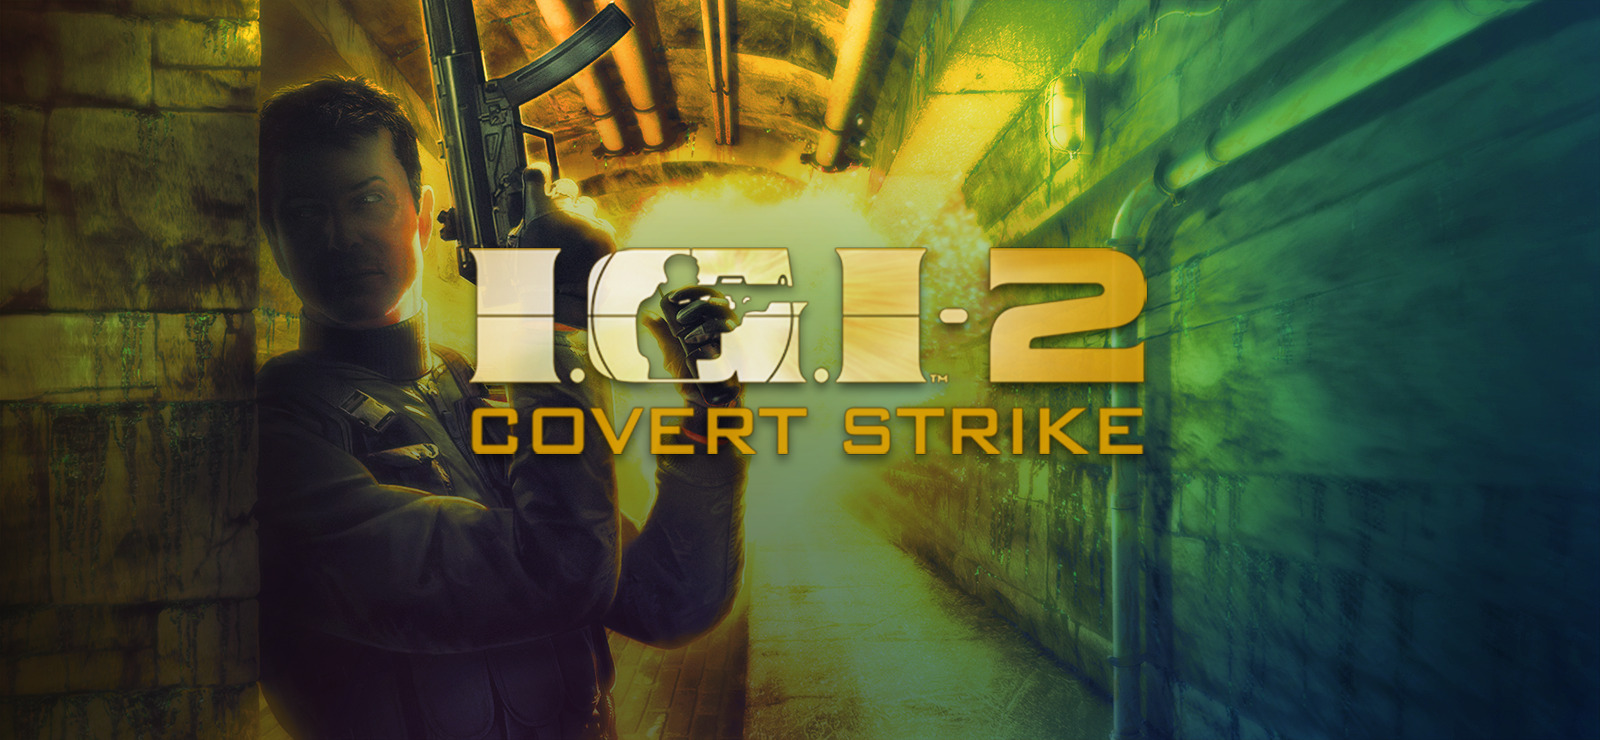 IGI 2: Cover Strike Single Player Demo 2